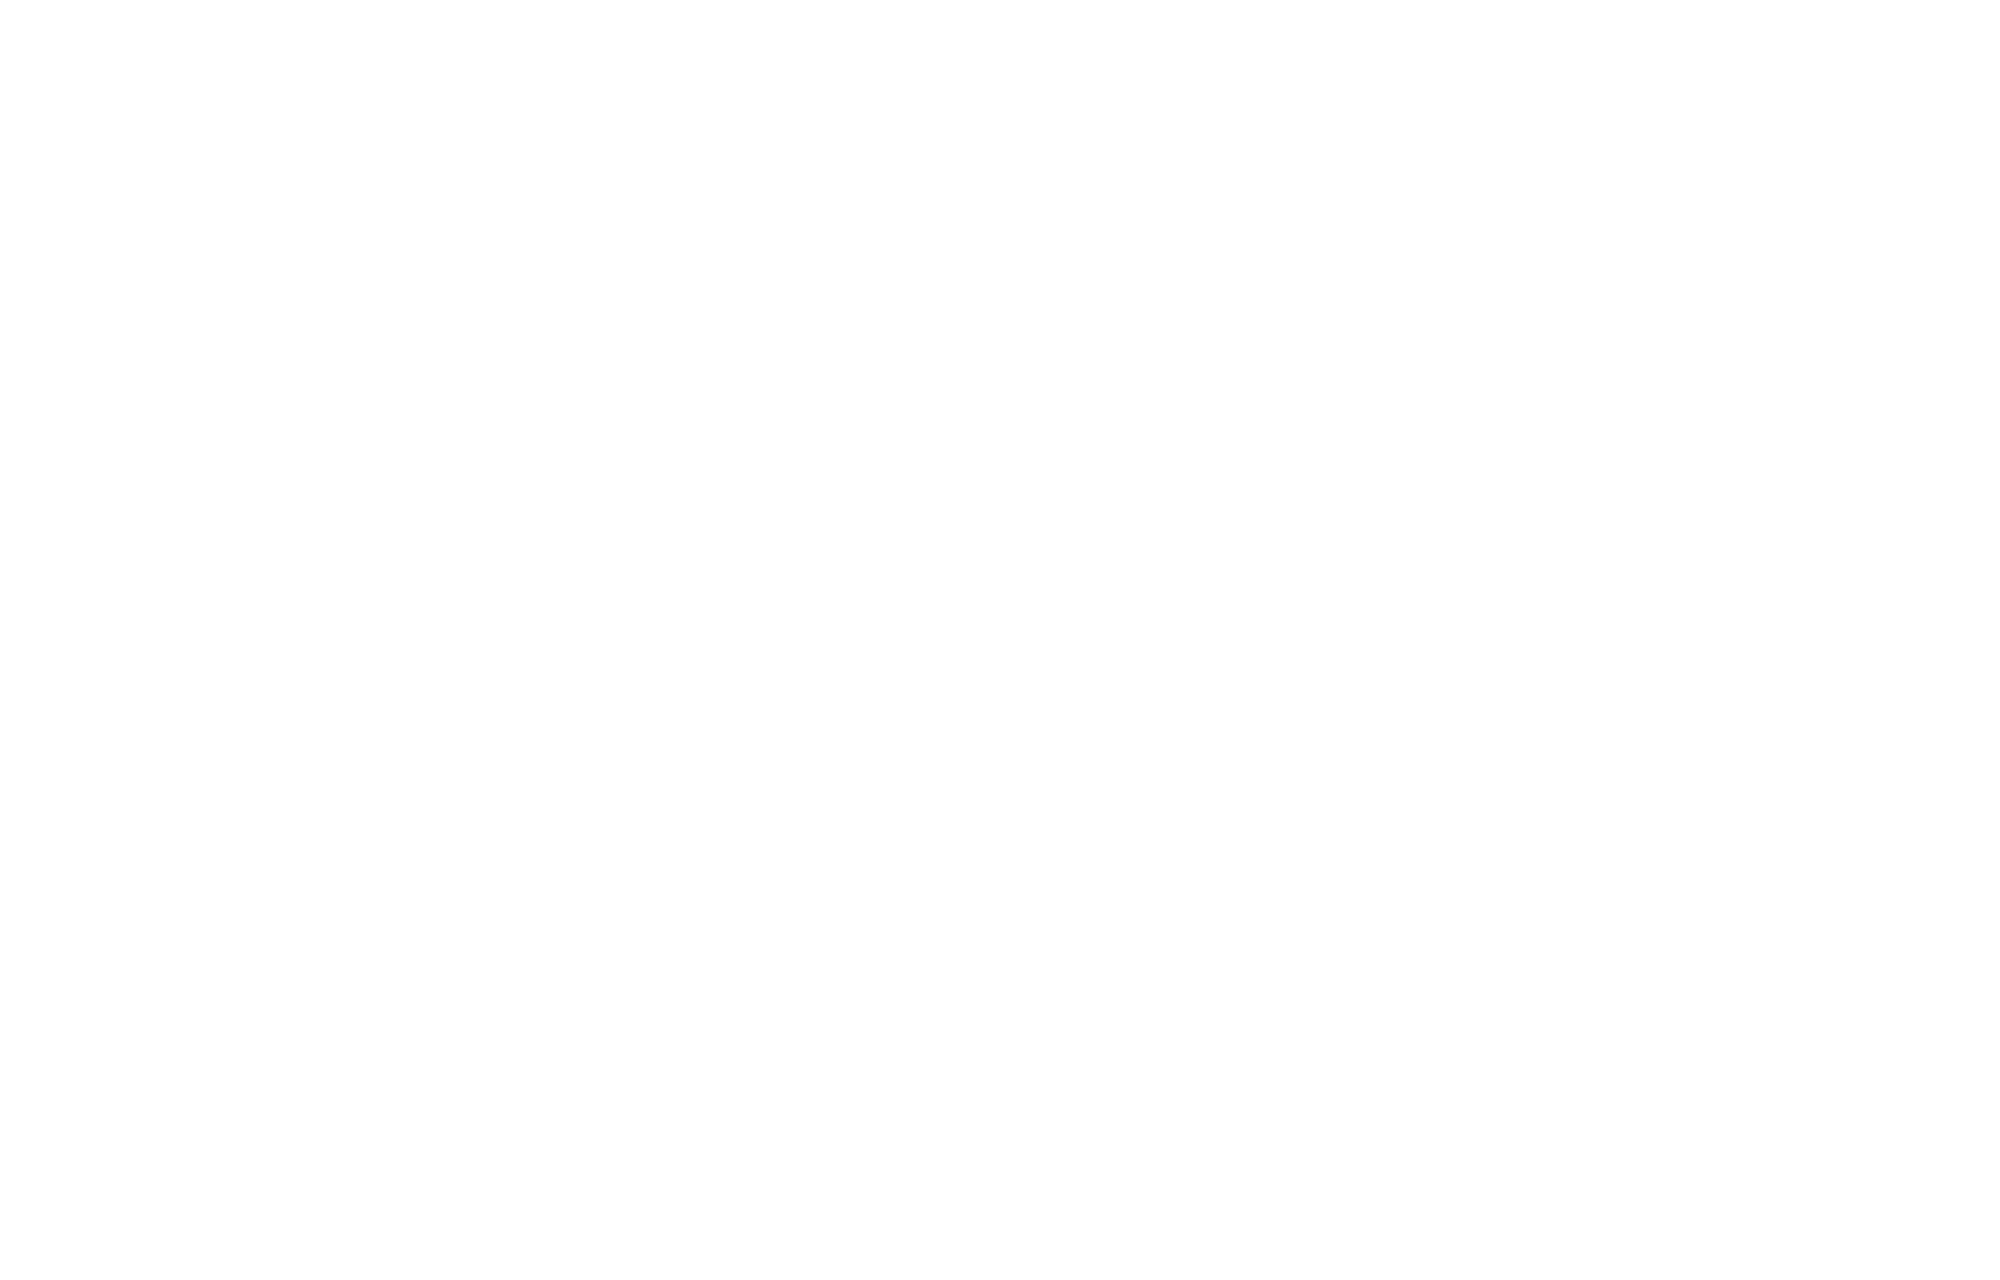 Golf Company